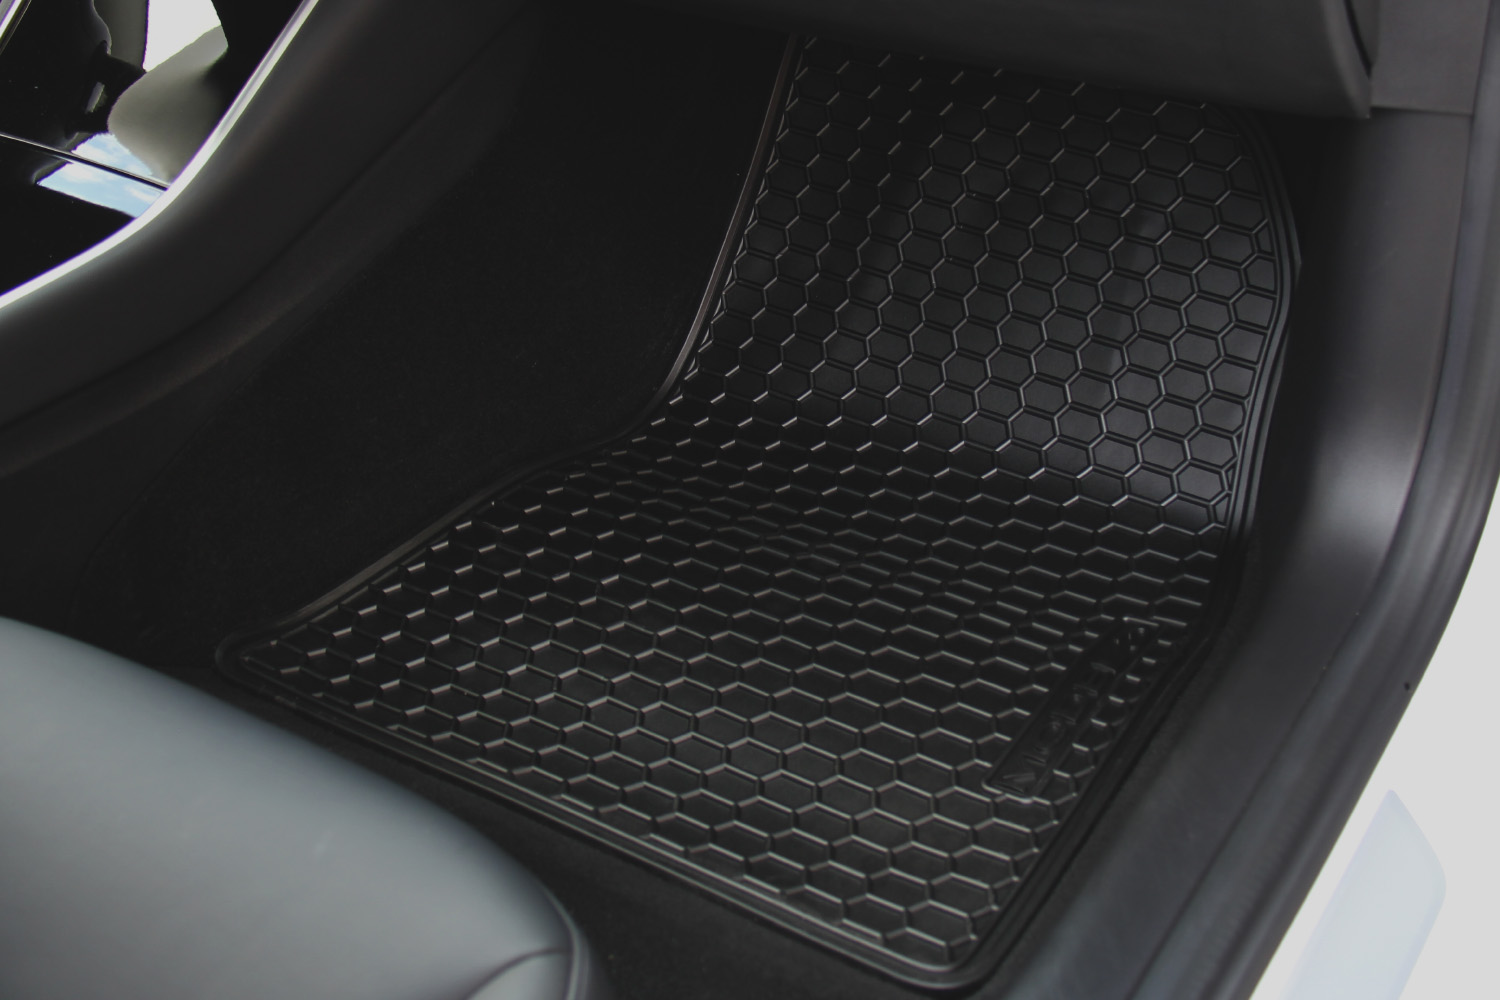 TeslaShop passenger mat